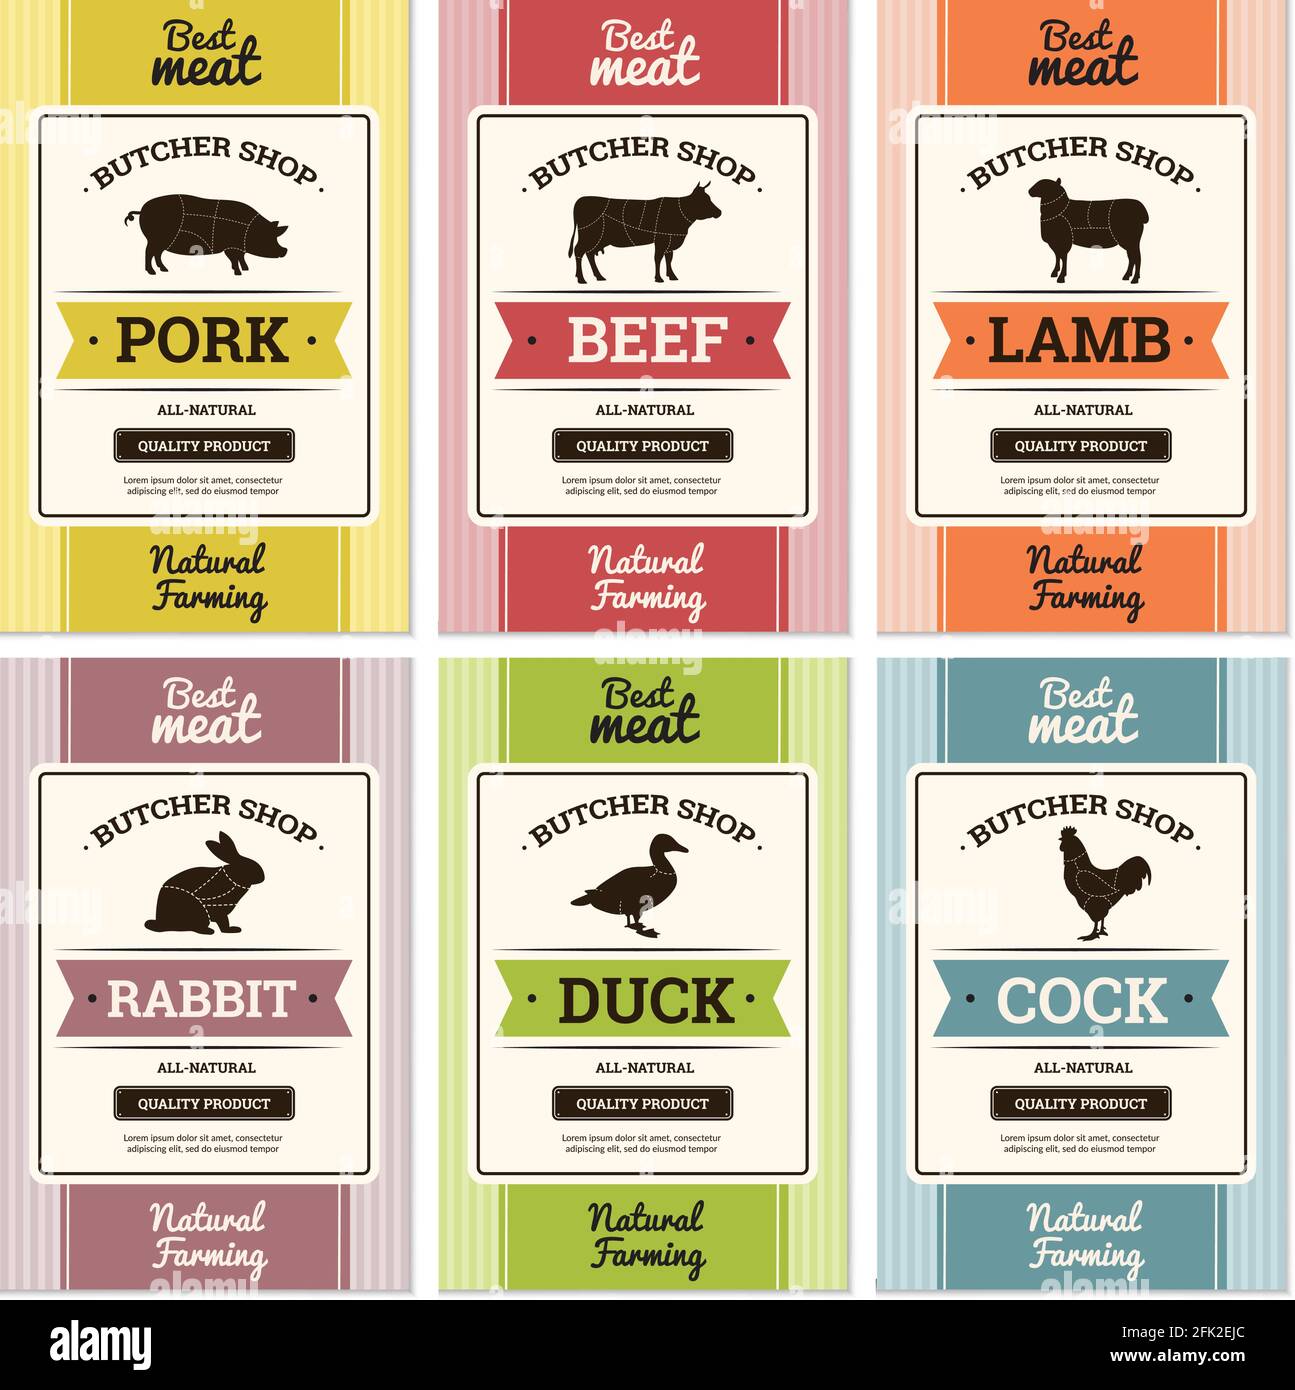 Natural Beef Label